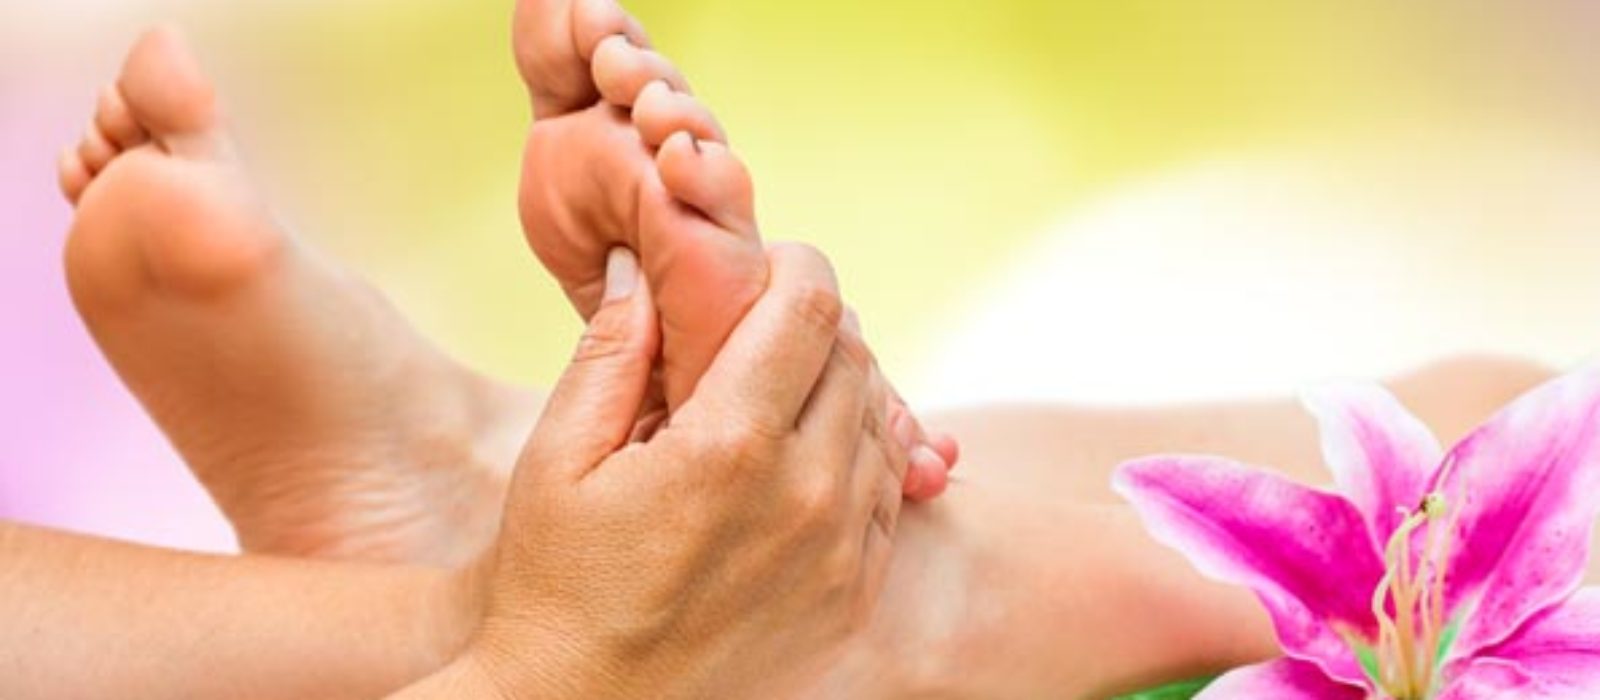 Spa Therapist Doing Foot Massage